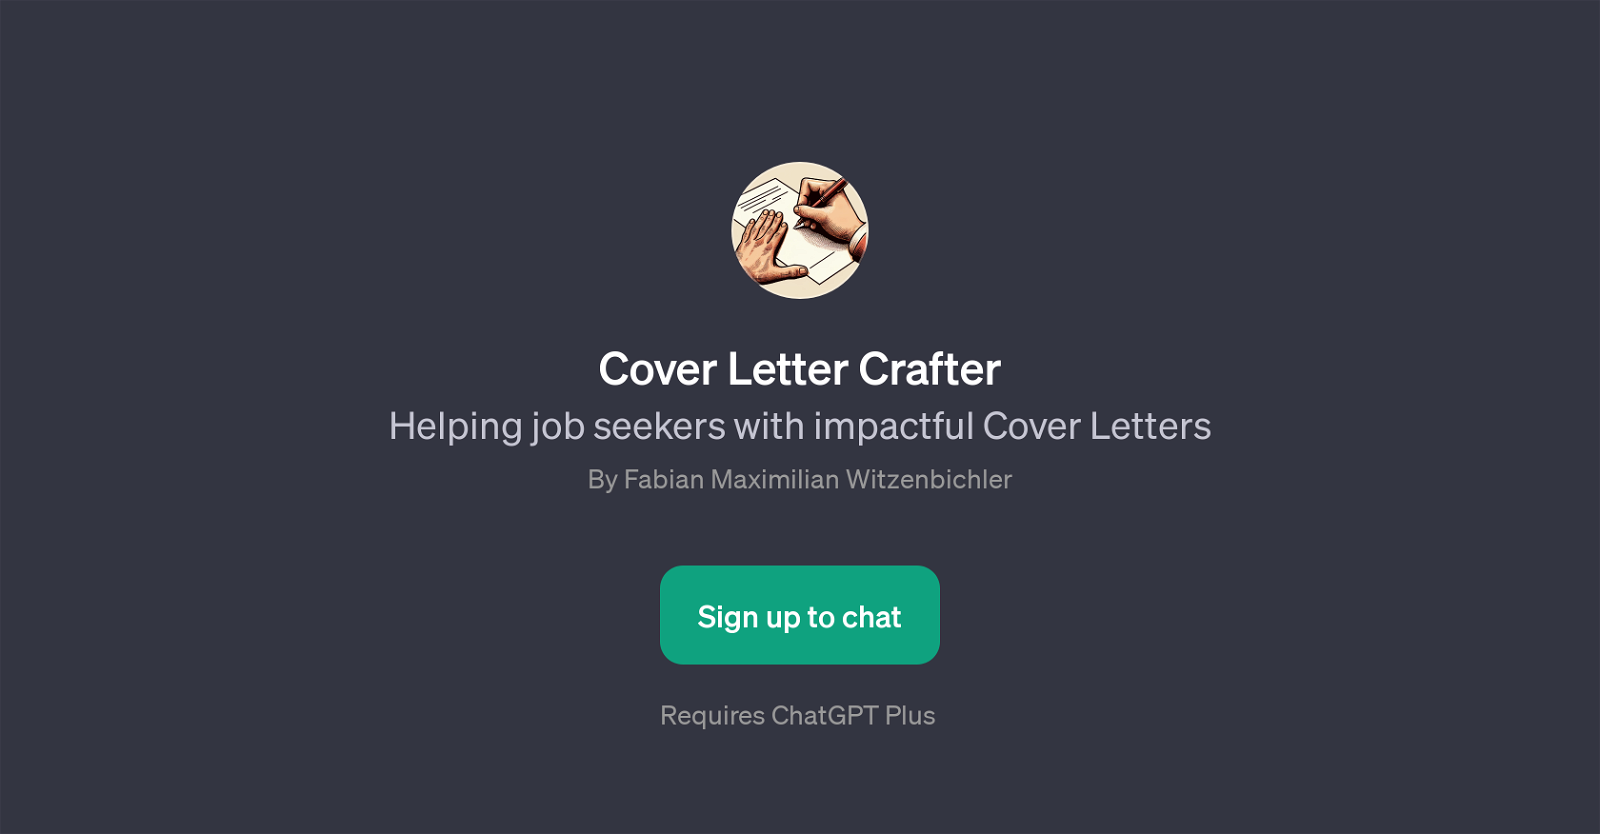 Cover Letter Crafter website